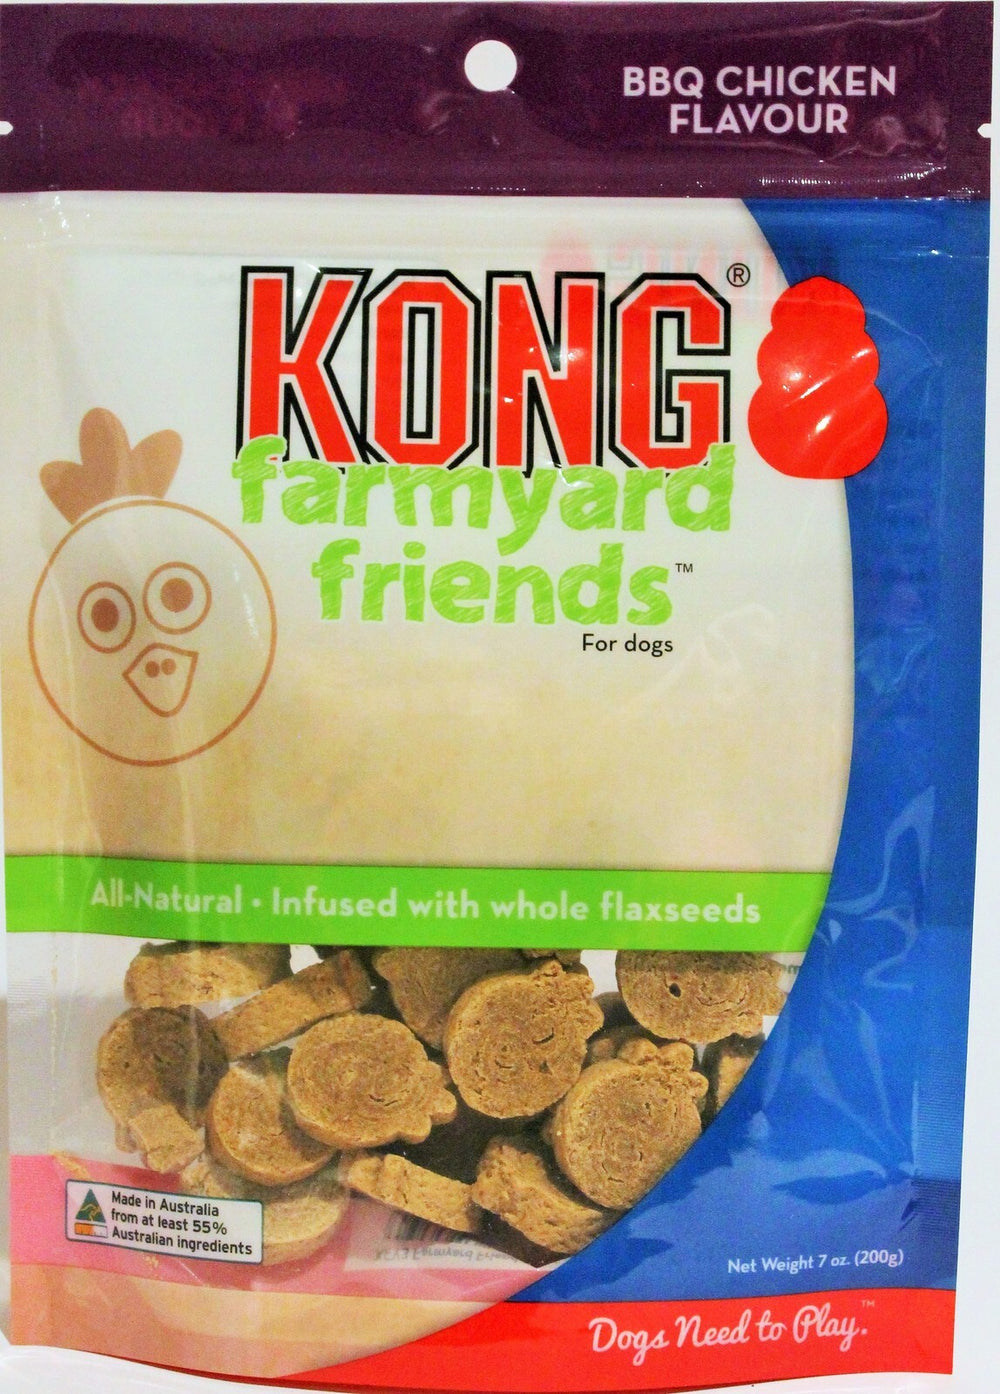 KONG Farmyard Friends BBQ Chicken Dog Treats